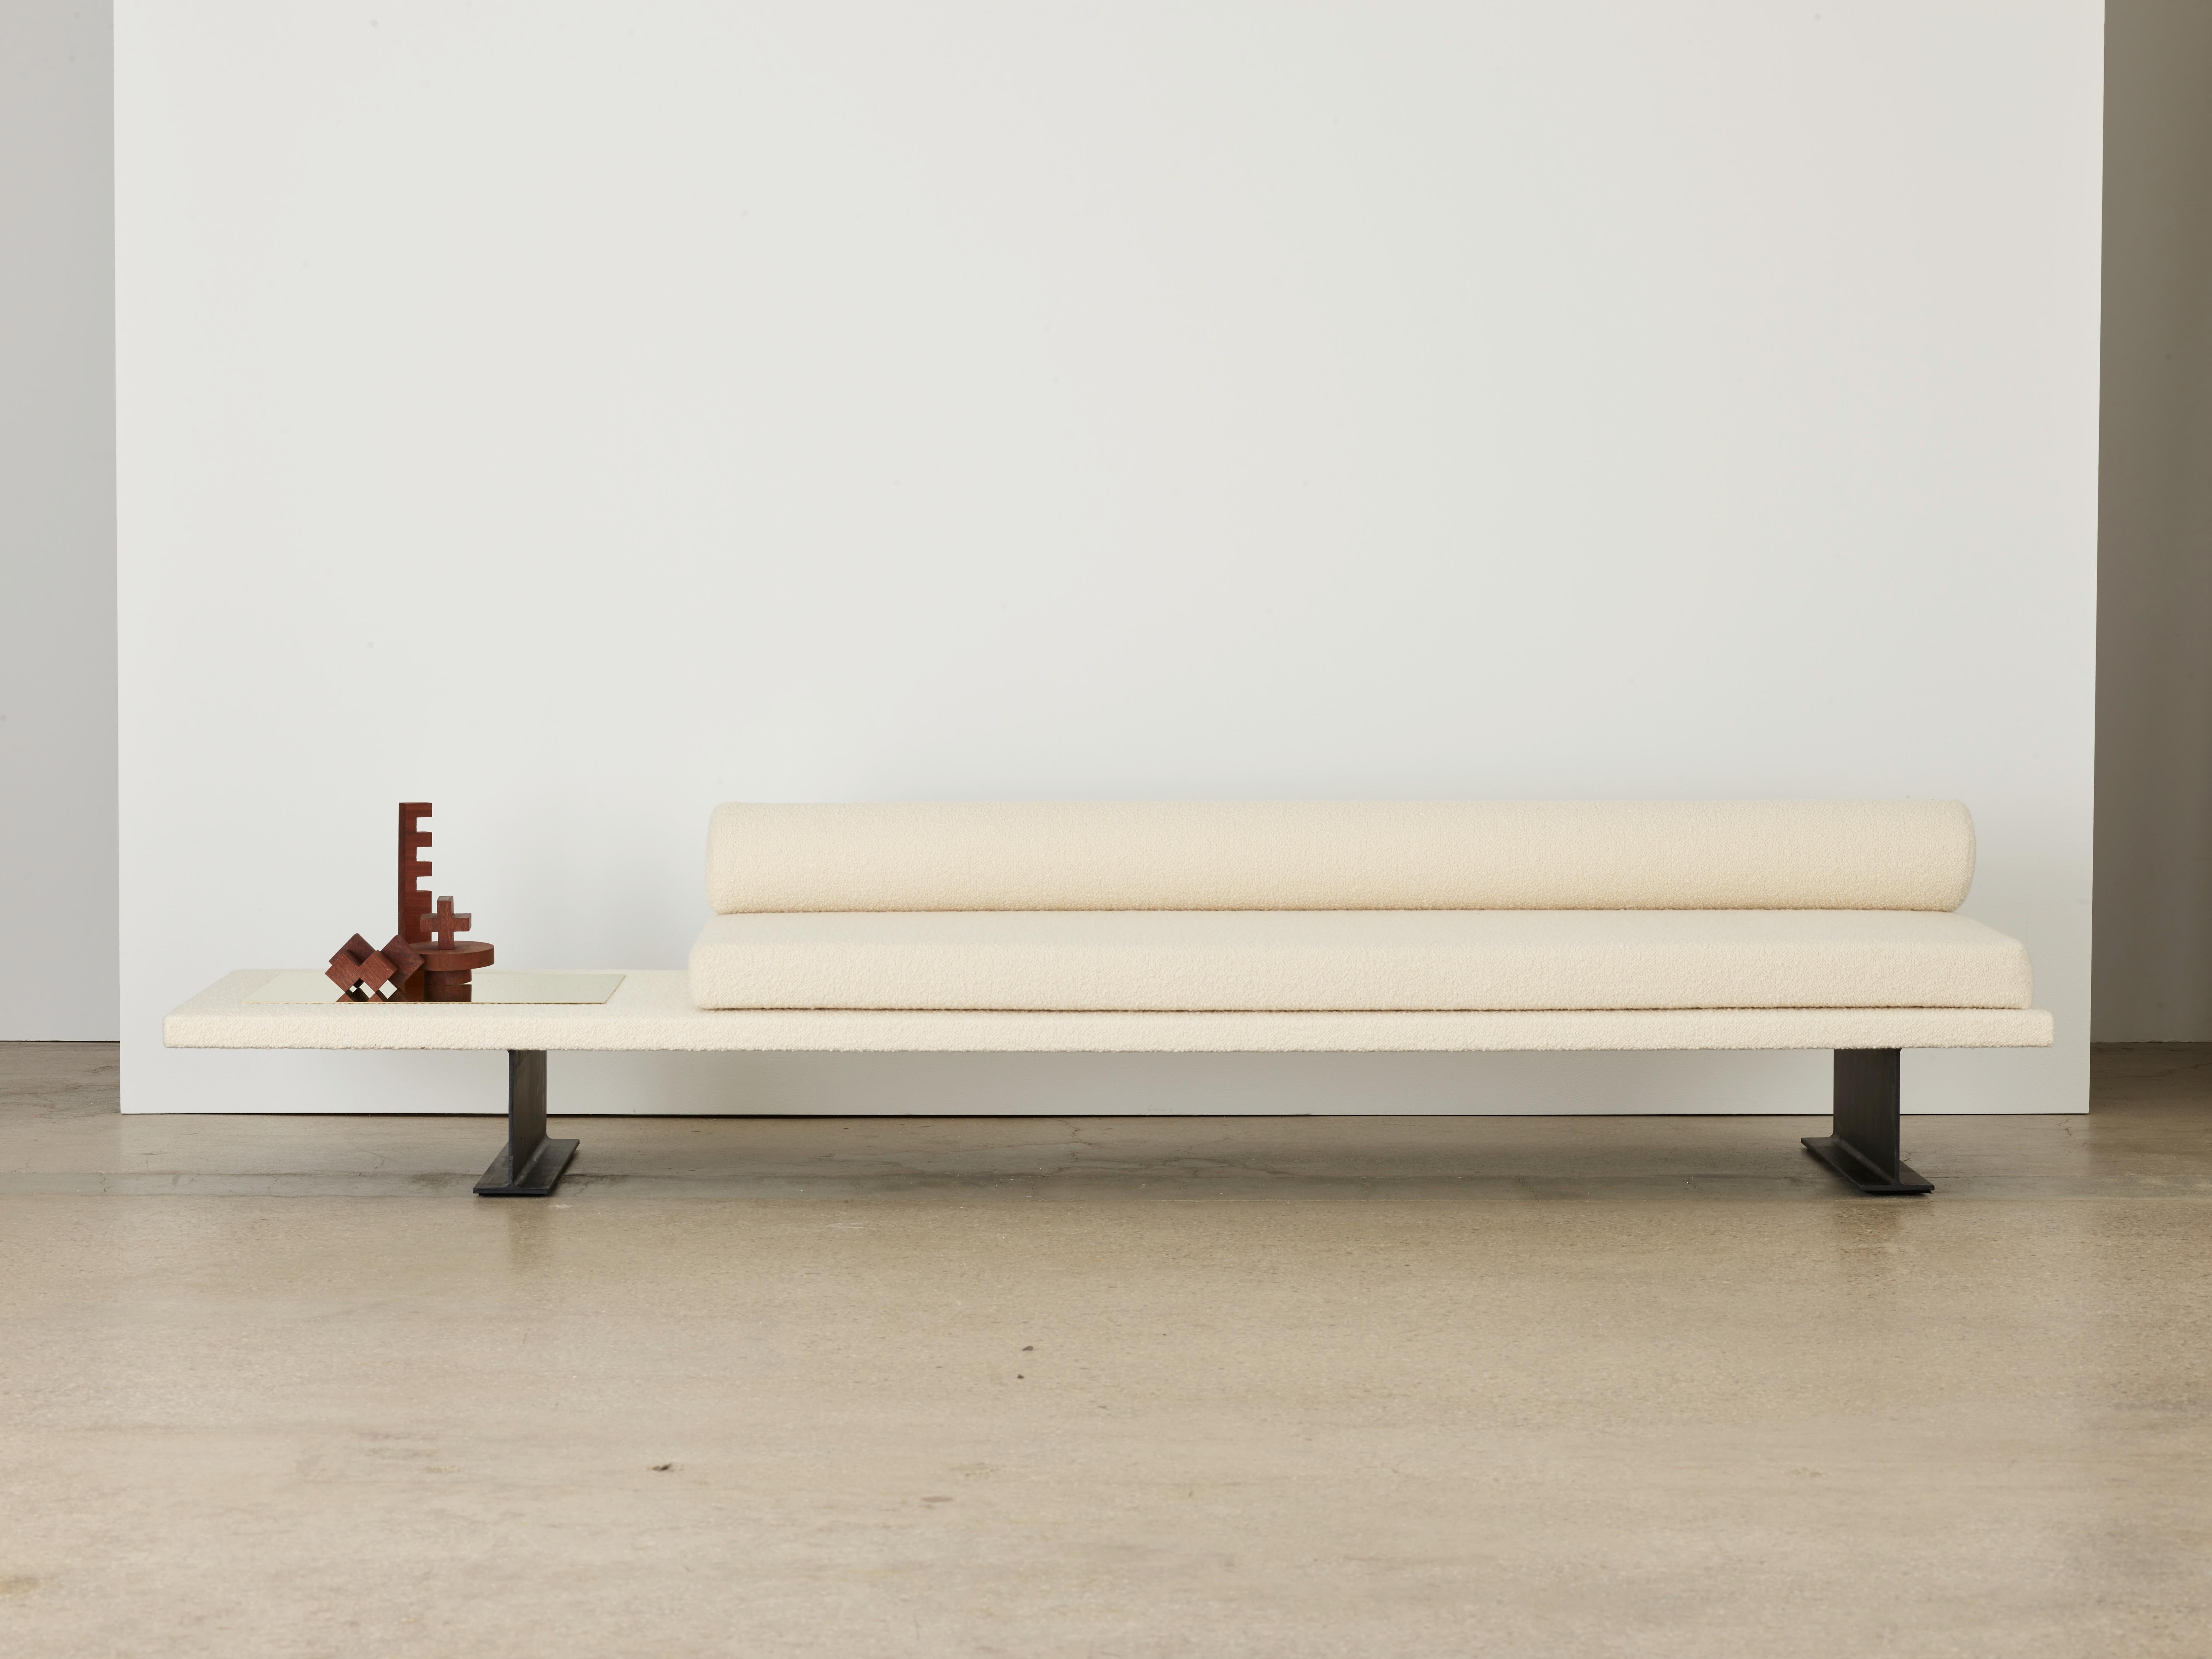 Trave sofa by Umberto Bellardi Ricci
Dimensions: D 24